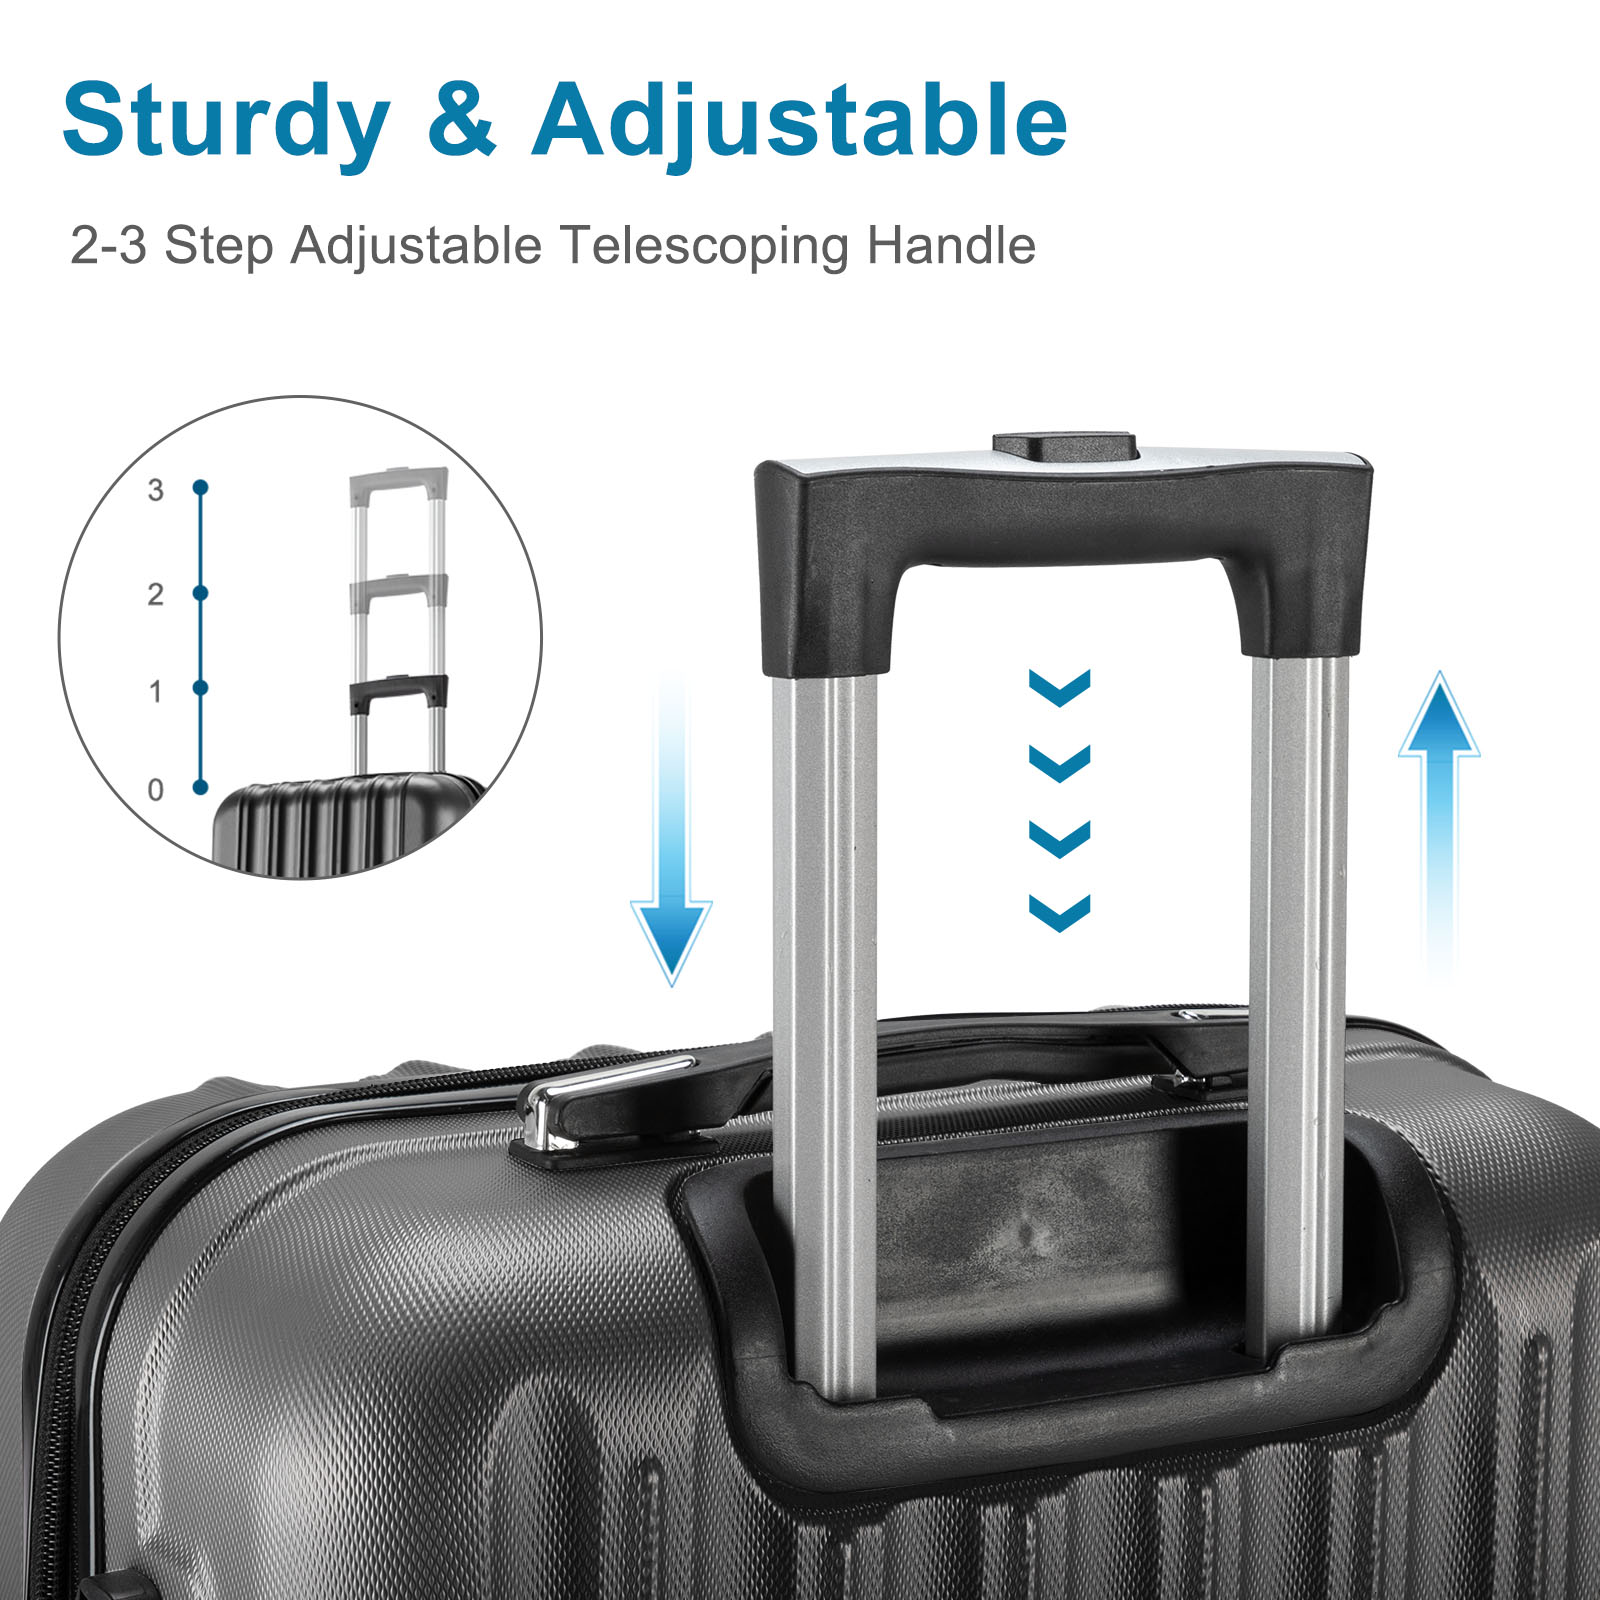 Zimtown 4 Piece Luggage Set, ABS Hard Shell Suitcase Luggage Sets Double Wheels with TSA Lock, Dark Gray - image 2 of 12